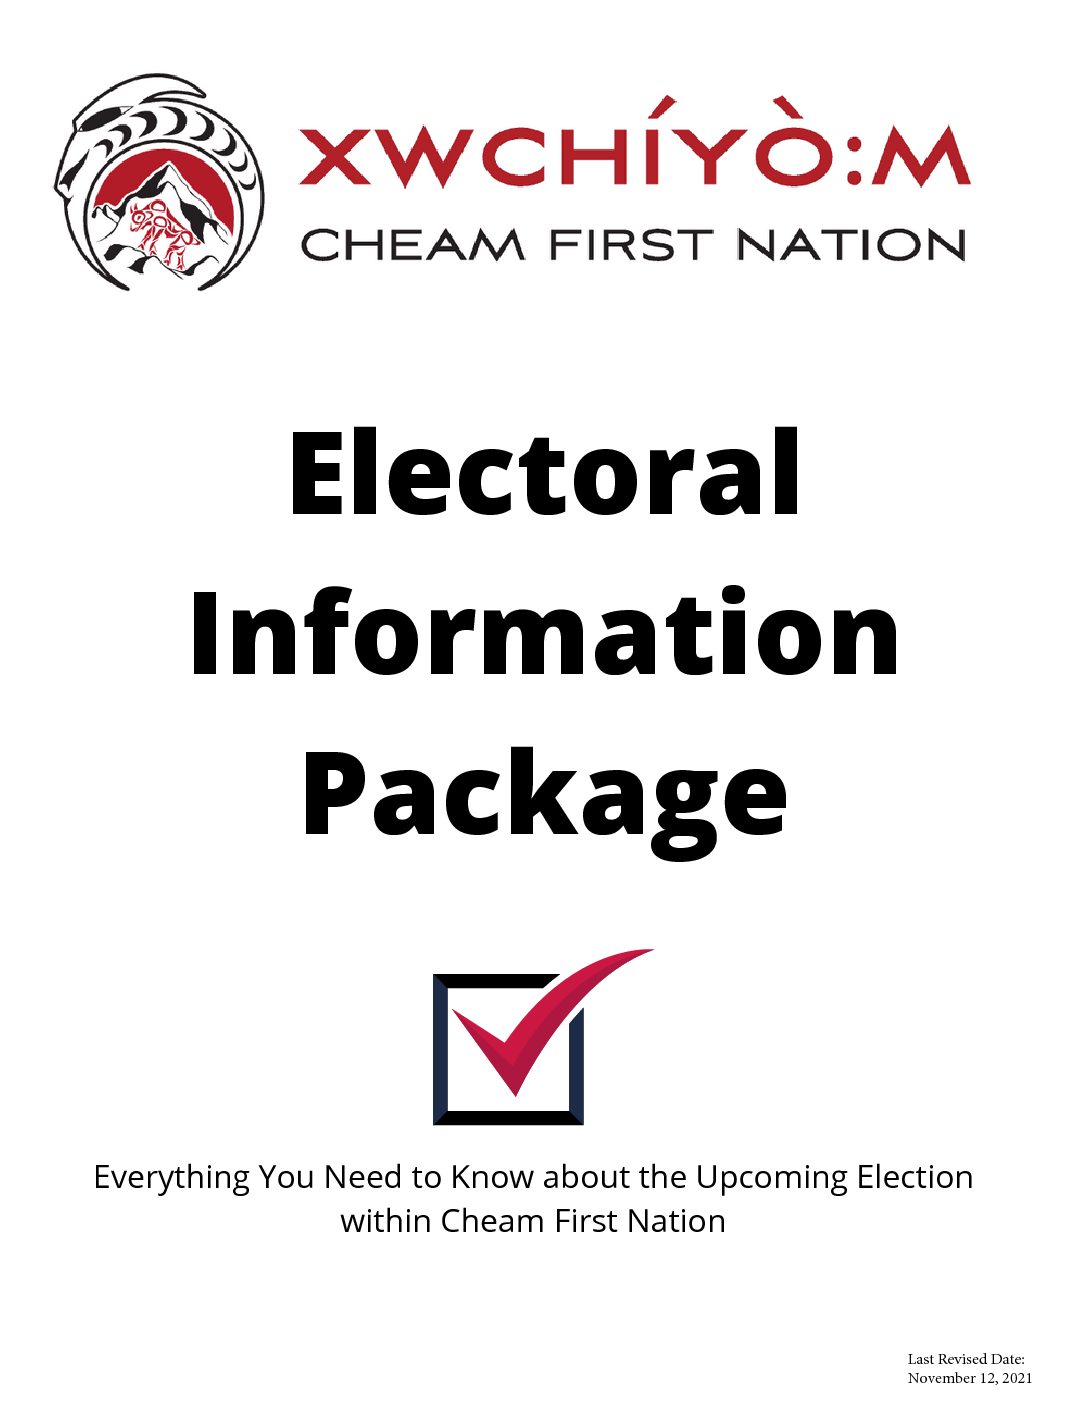 November 25 Election – Information Package